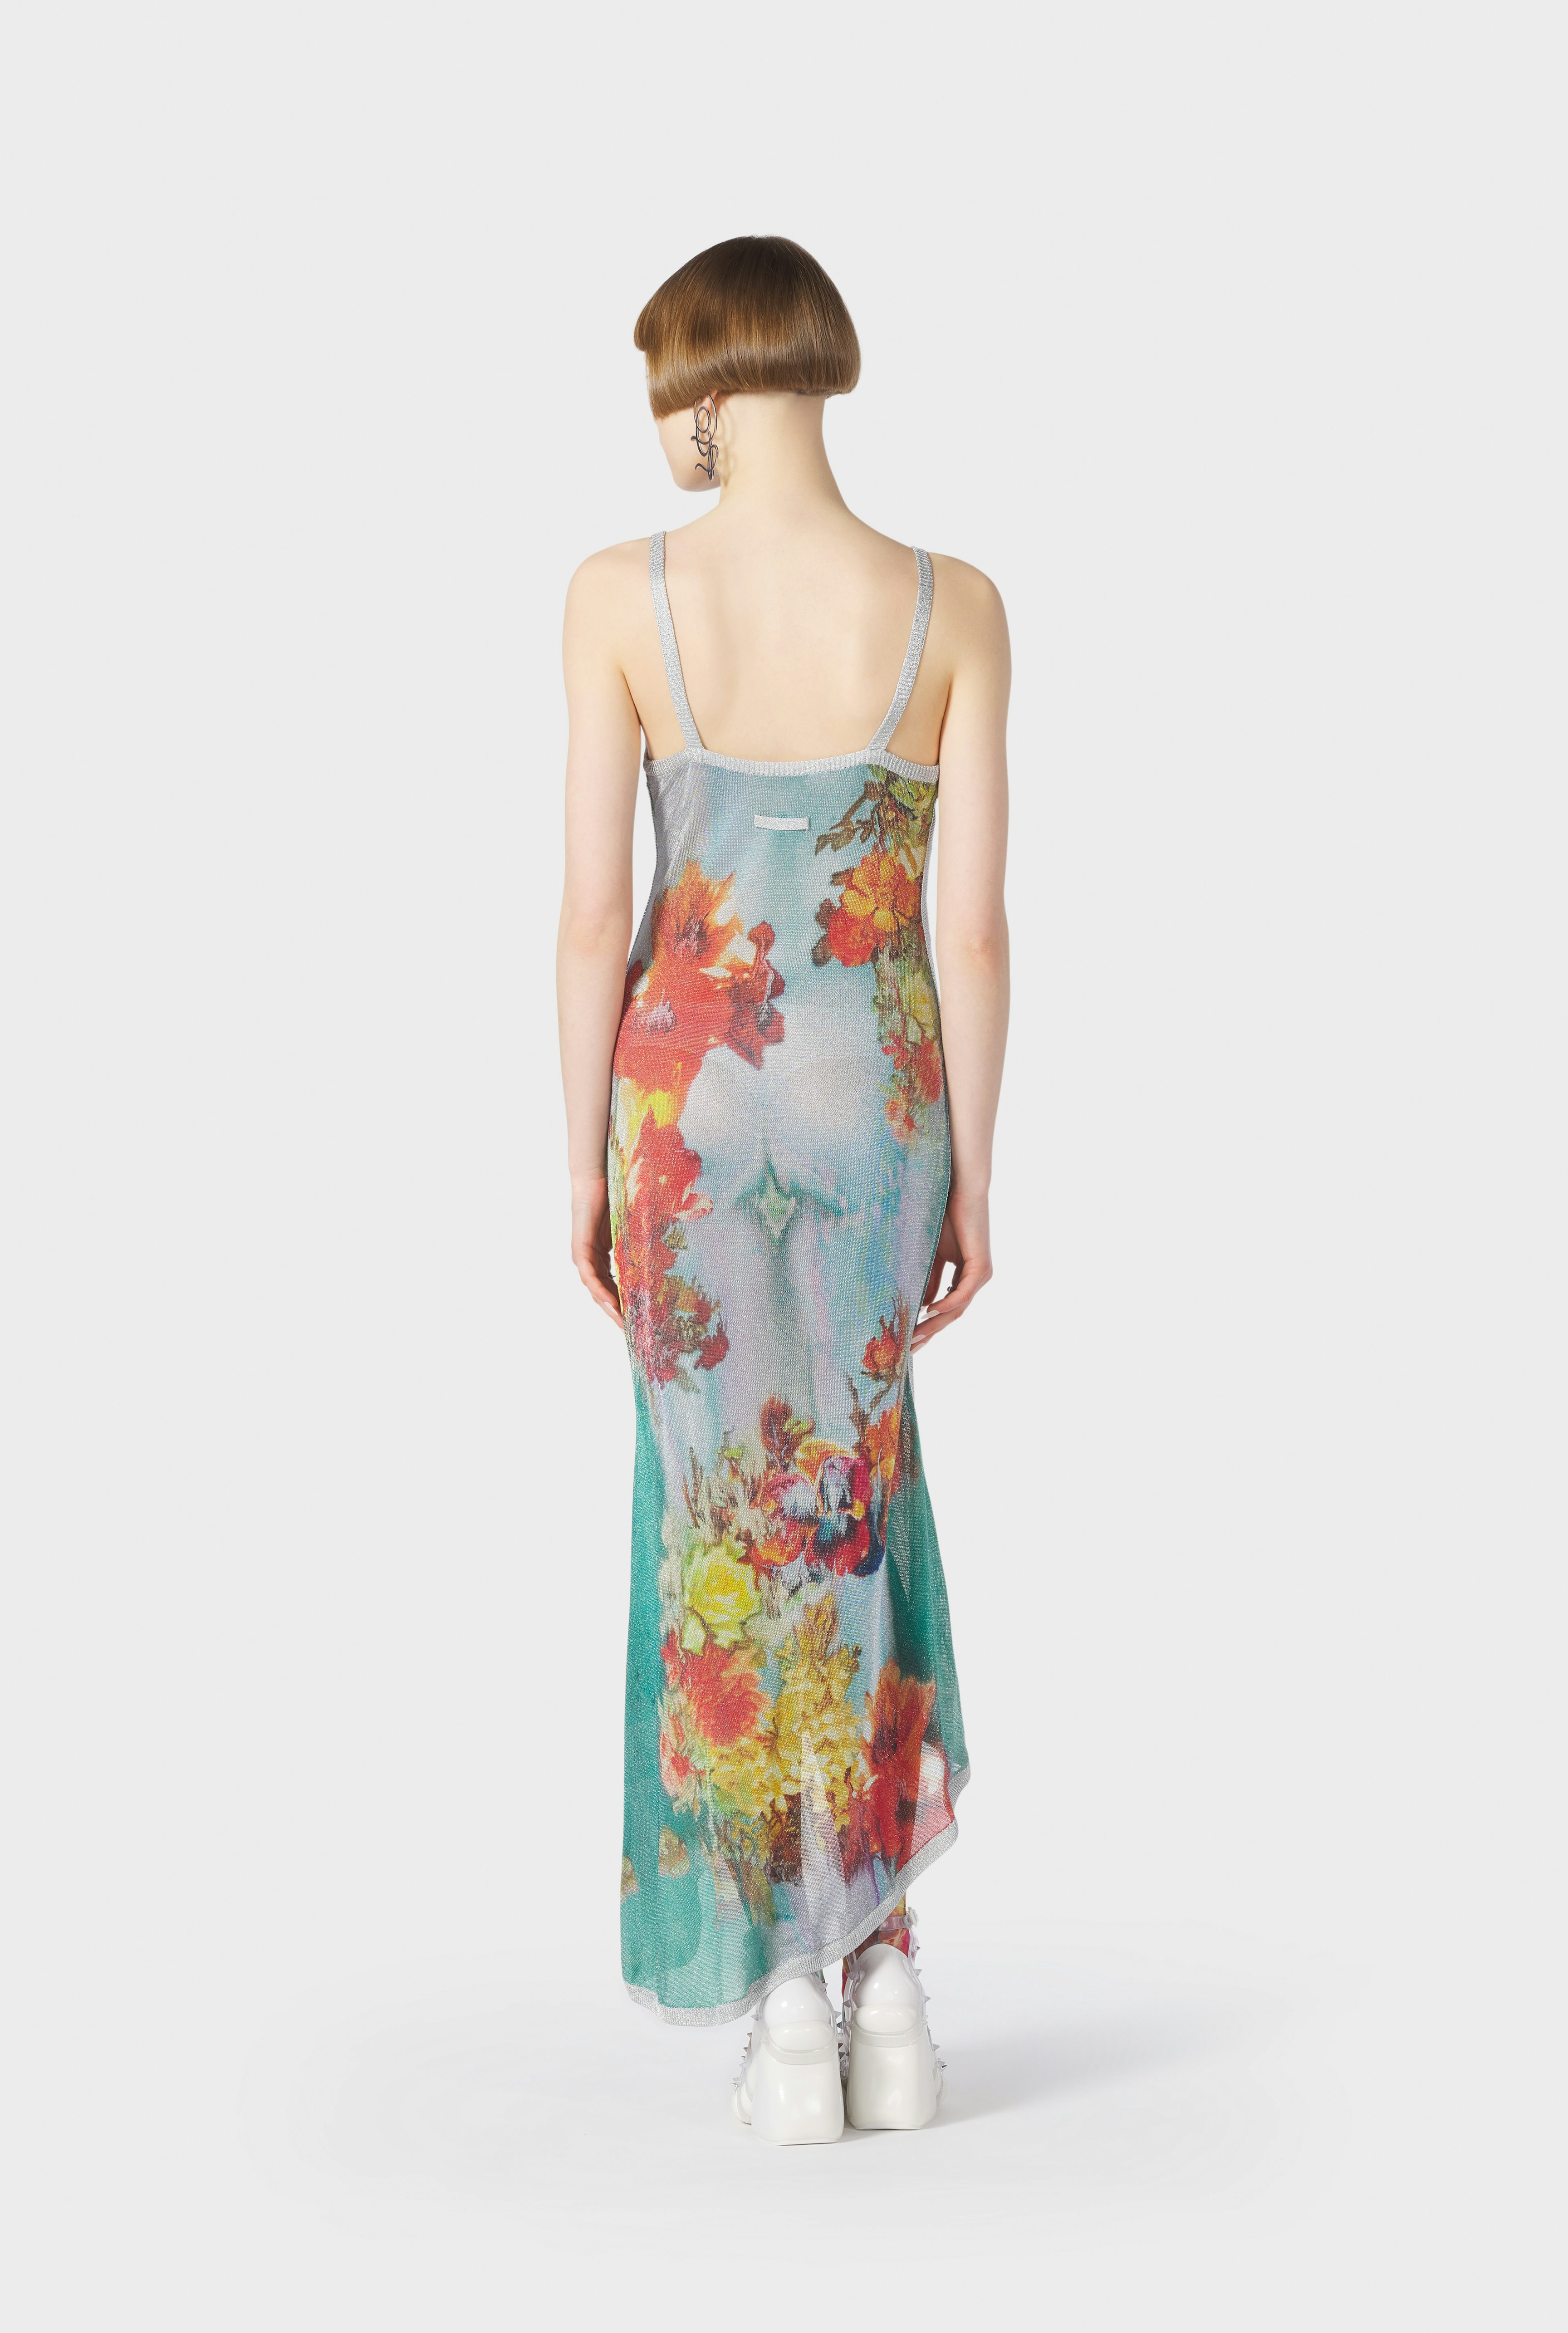 The Body Flower Knit Dress